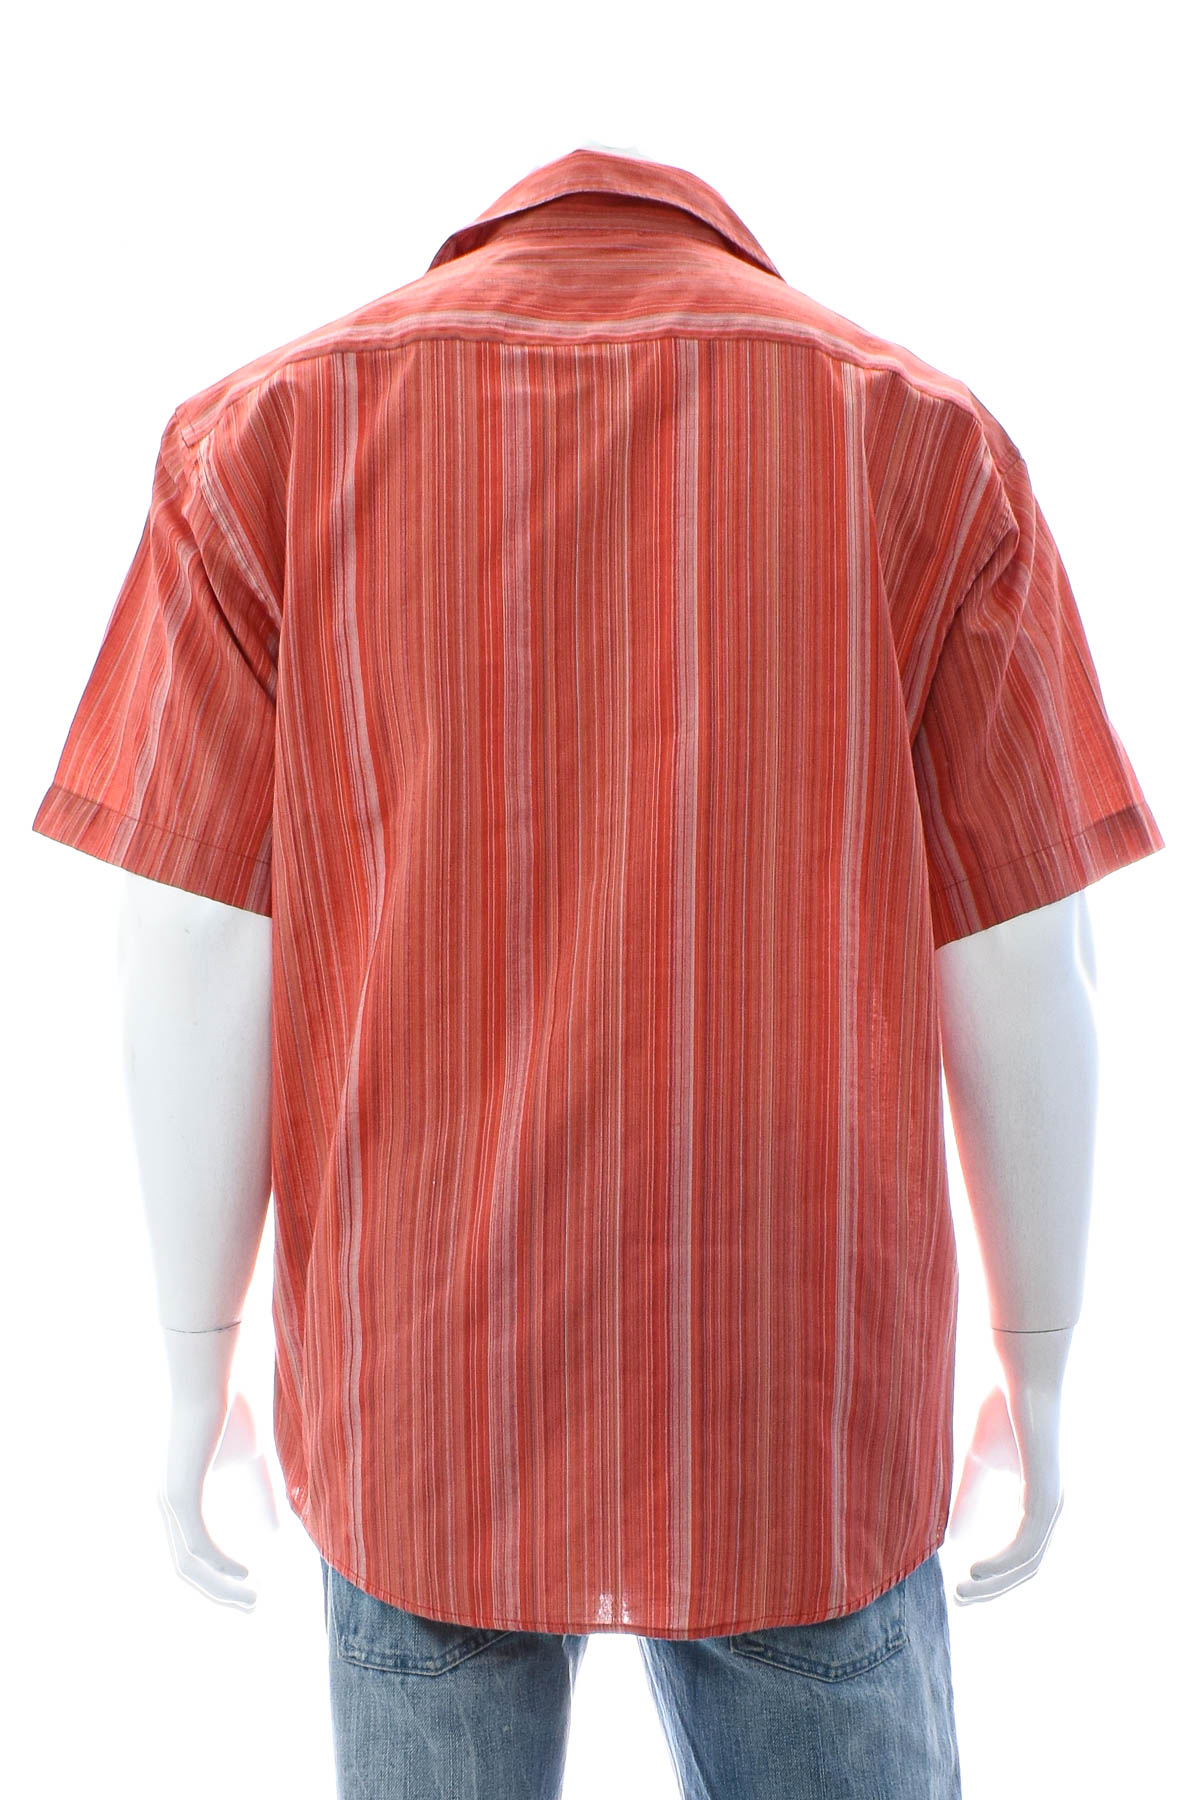 Men's shirt - Torelli - 1